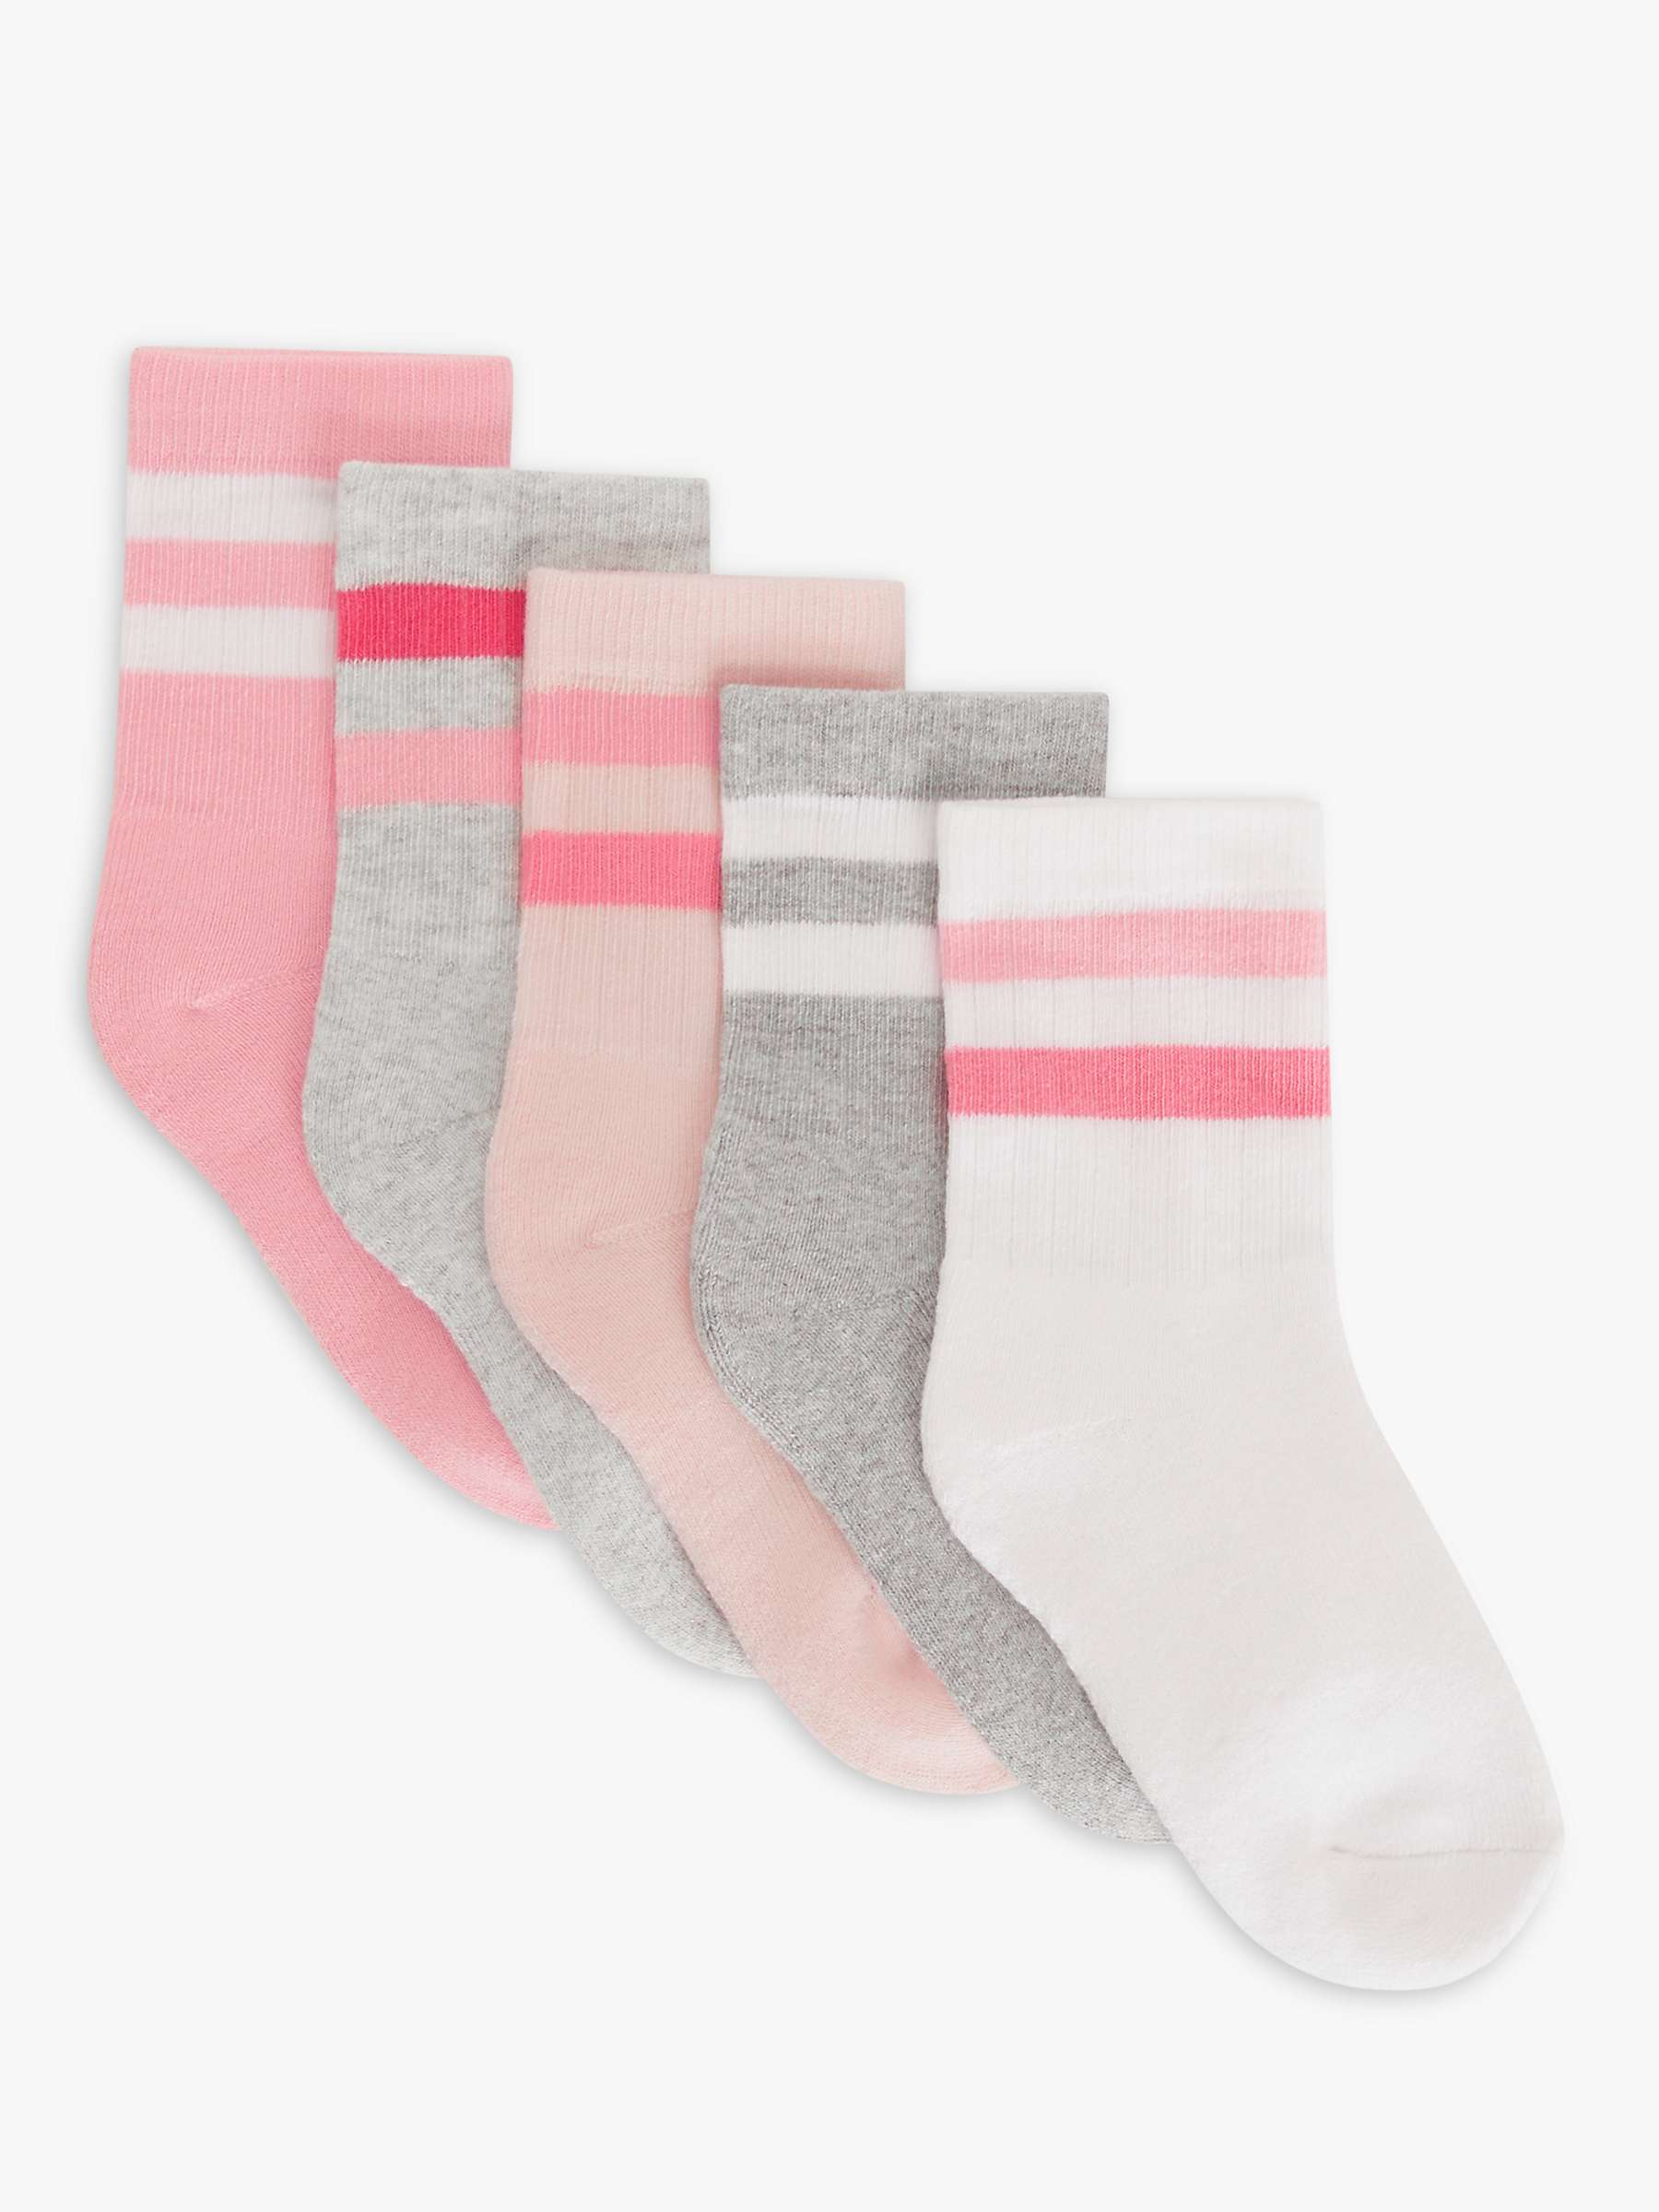 Buy John Lewis Kids' Sport Striped Tube Socks, Pack of 5, Pink/Multi Online at johnlewis.com